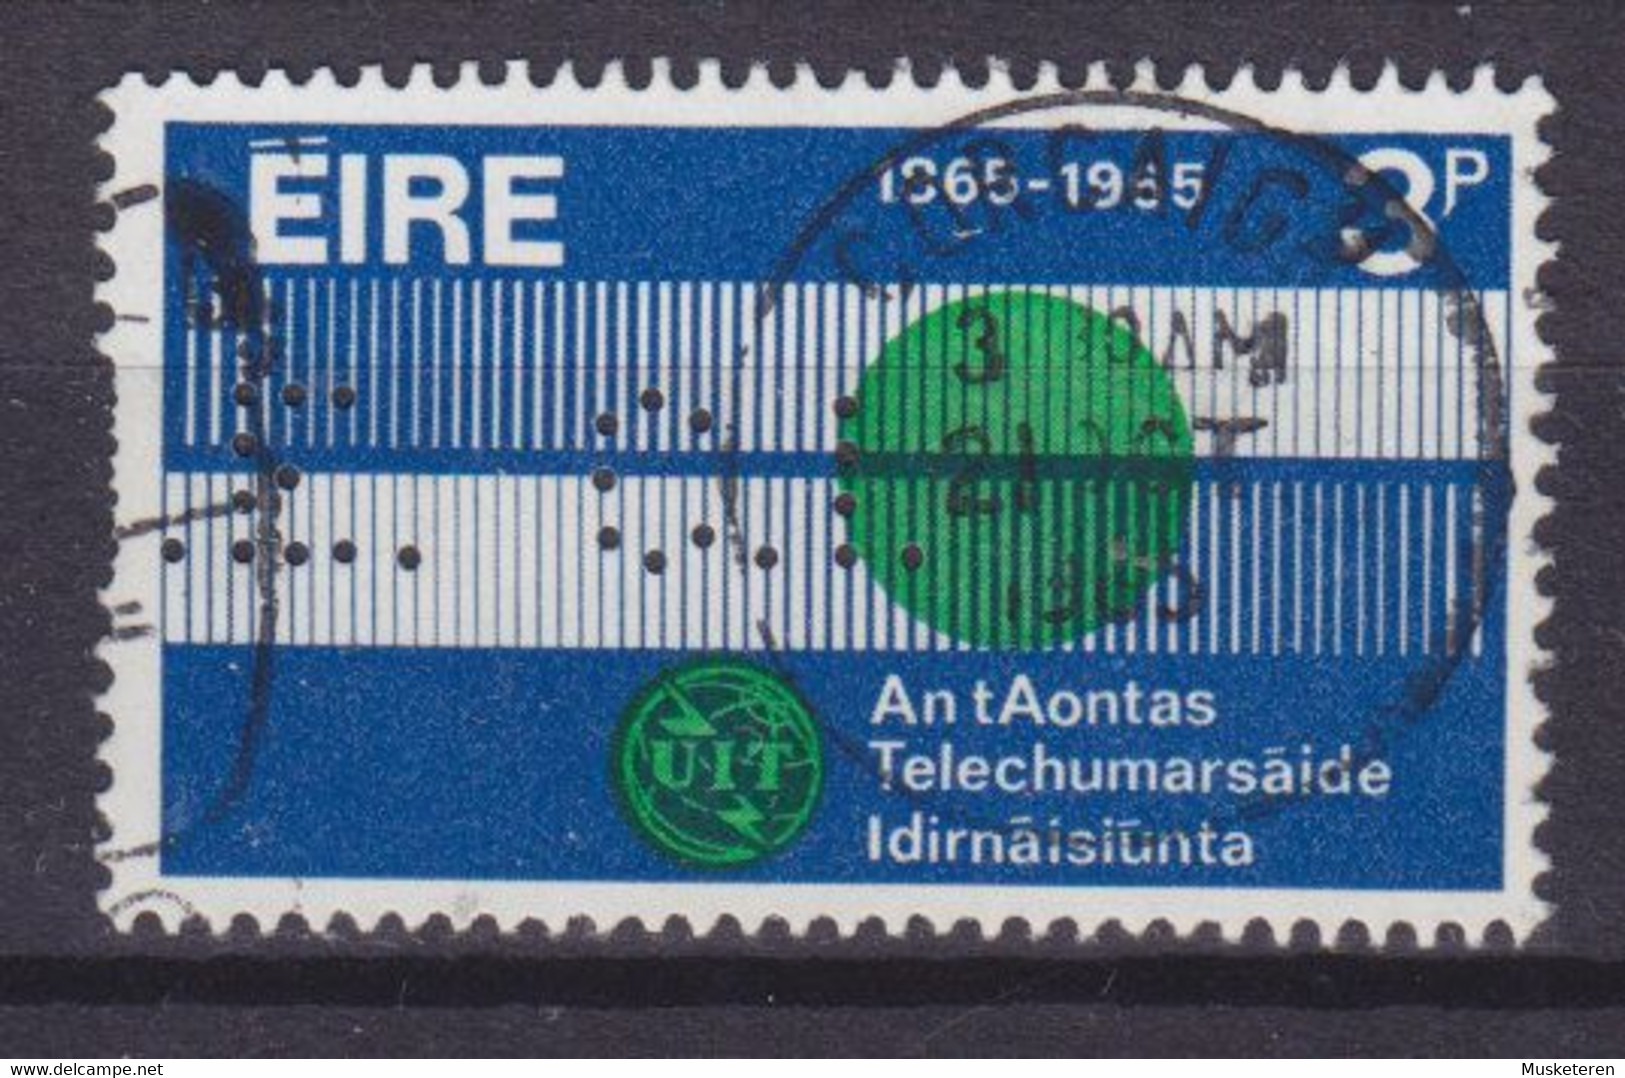 Ireland Perfin Perforé Lochung 'E.C.I.'? ERROR Variety Misplaced Perf. UIT Stamp CORCAIGH Cork 1965 Cancel - Sin Dentar, Pruebas De Impresión Y Variedades